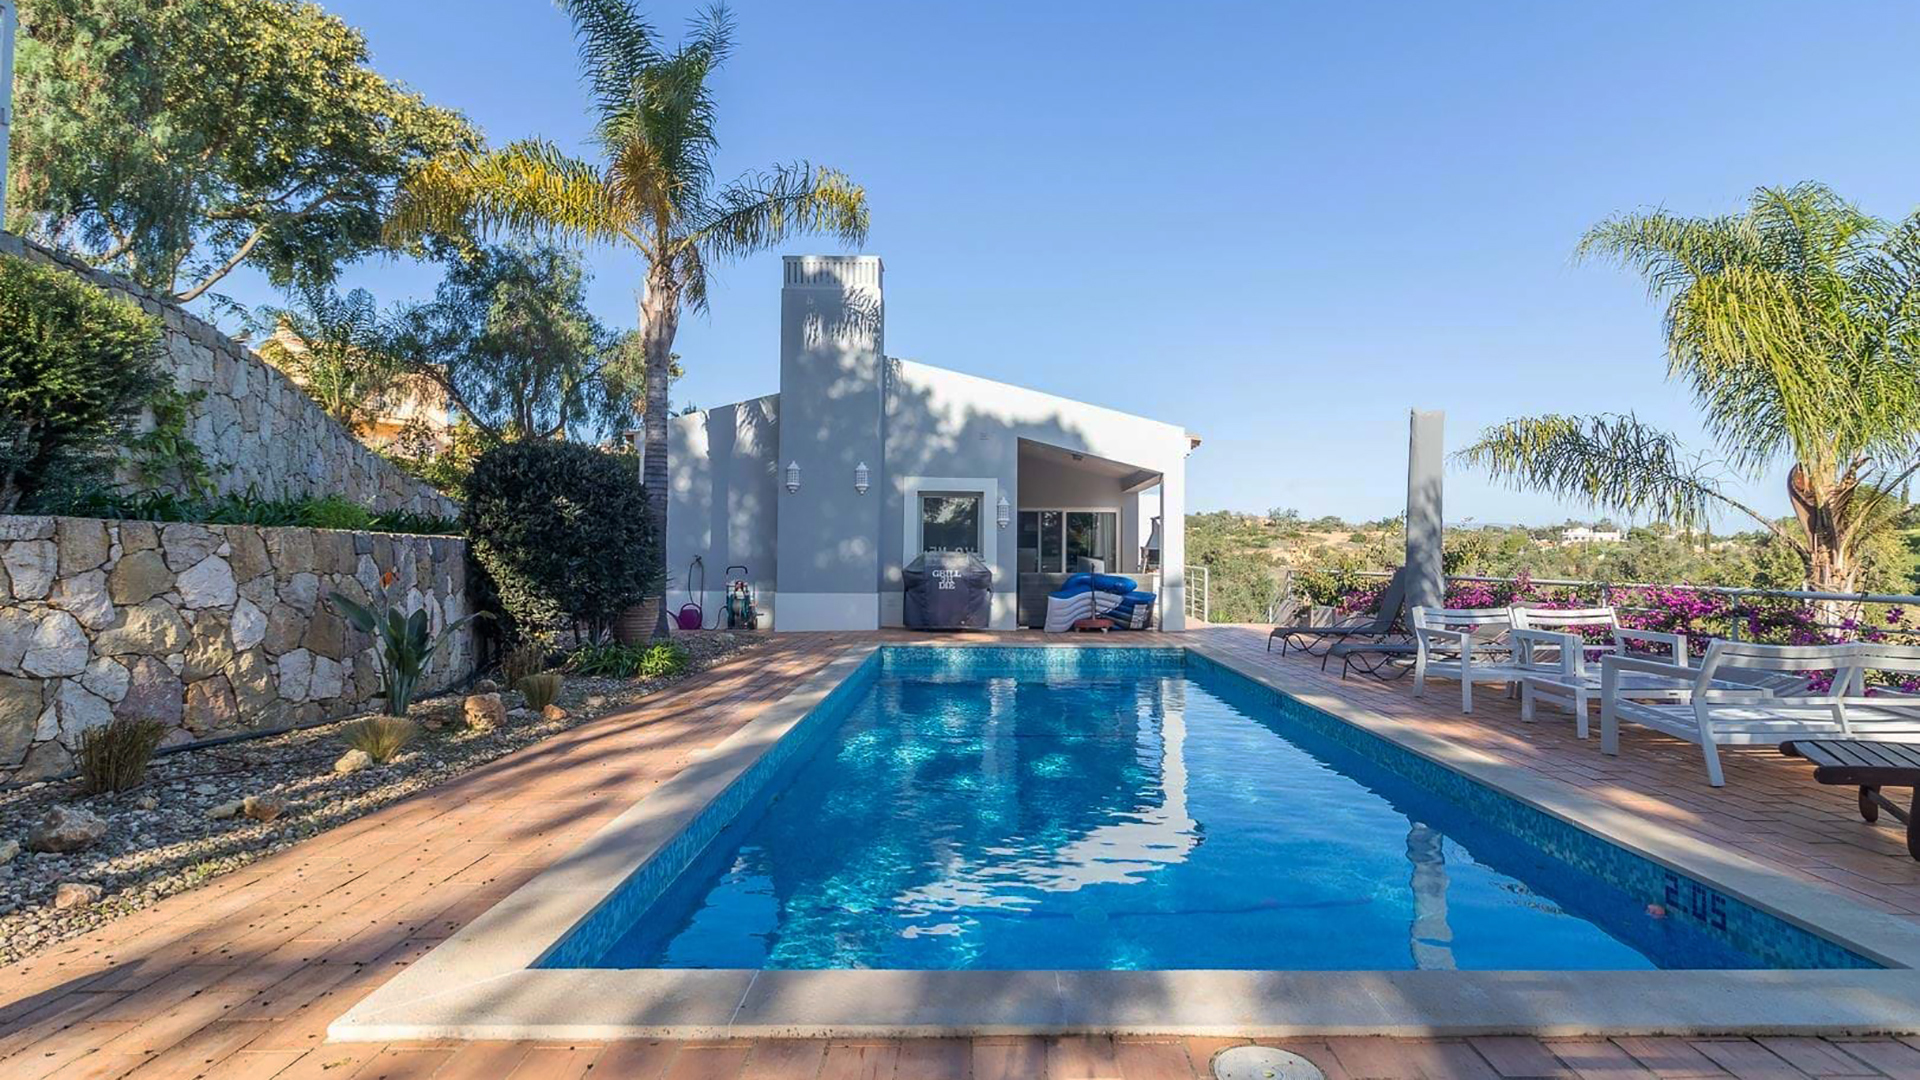 Recently renovated 3 bedroom villa with pool in golf resort close to Carvoeiro, West Algarve | PCG2053 3 bedroom, 4 bathroom villa with pool, surrounded by a well kept garden in a popular golf resort.